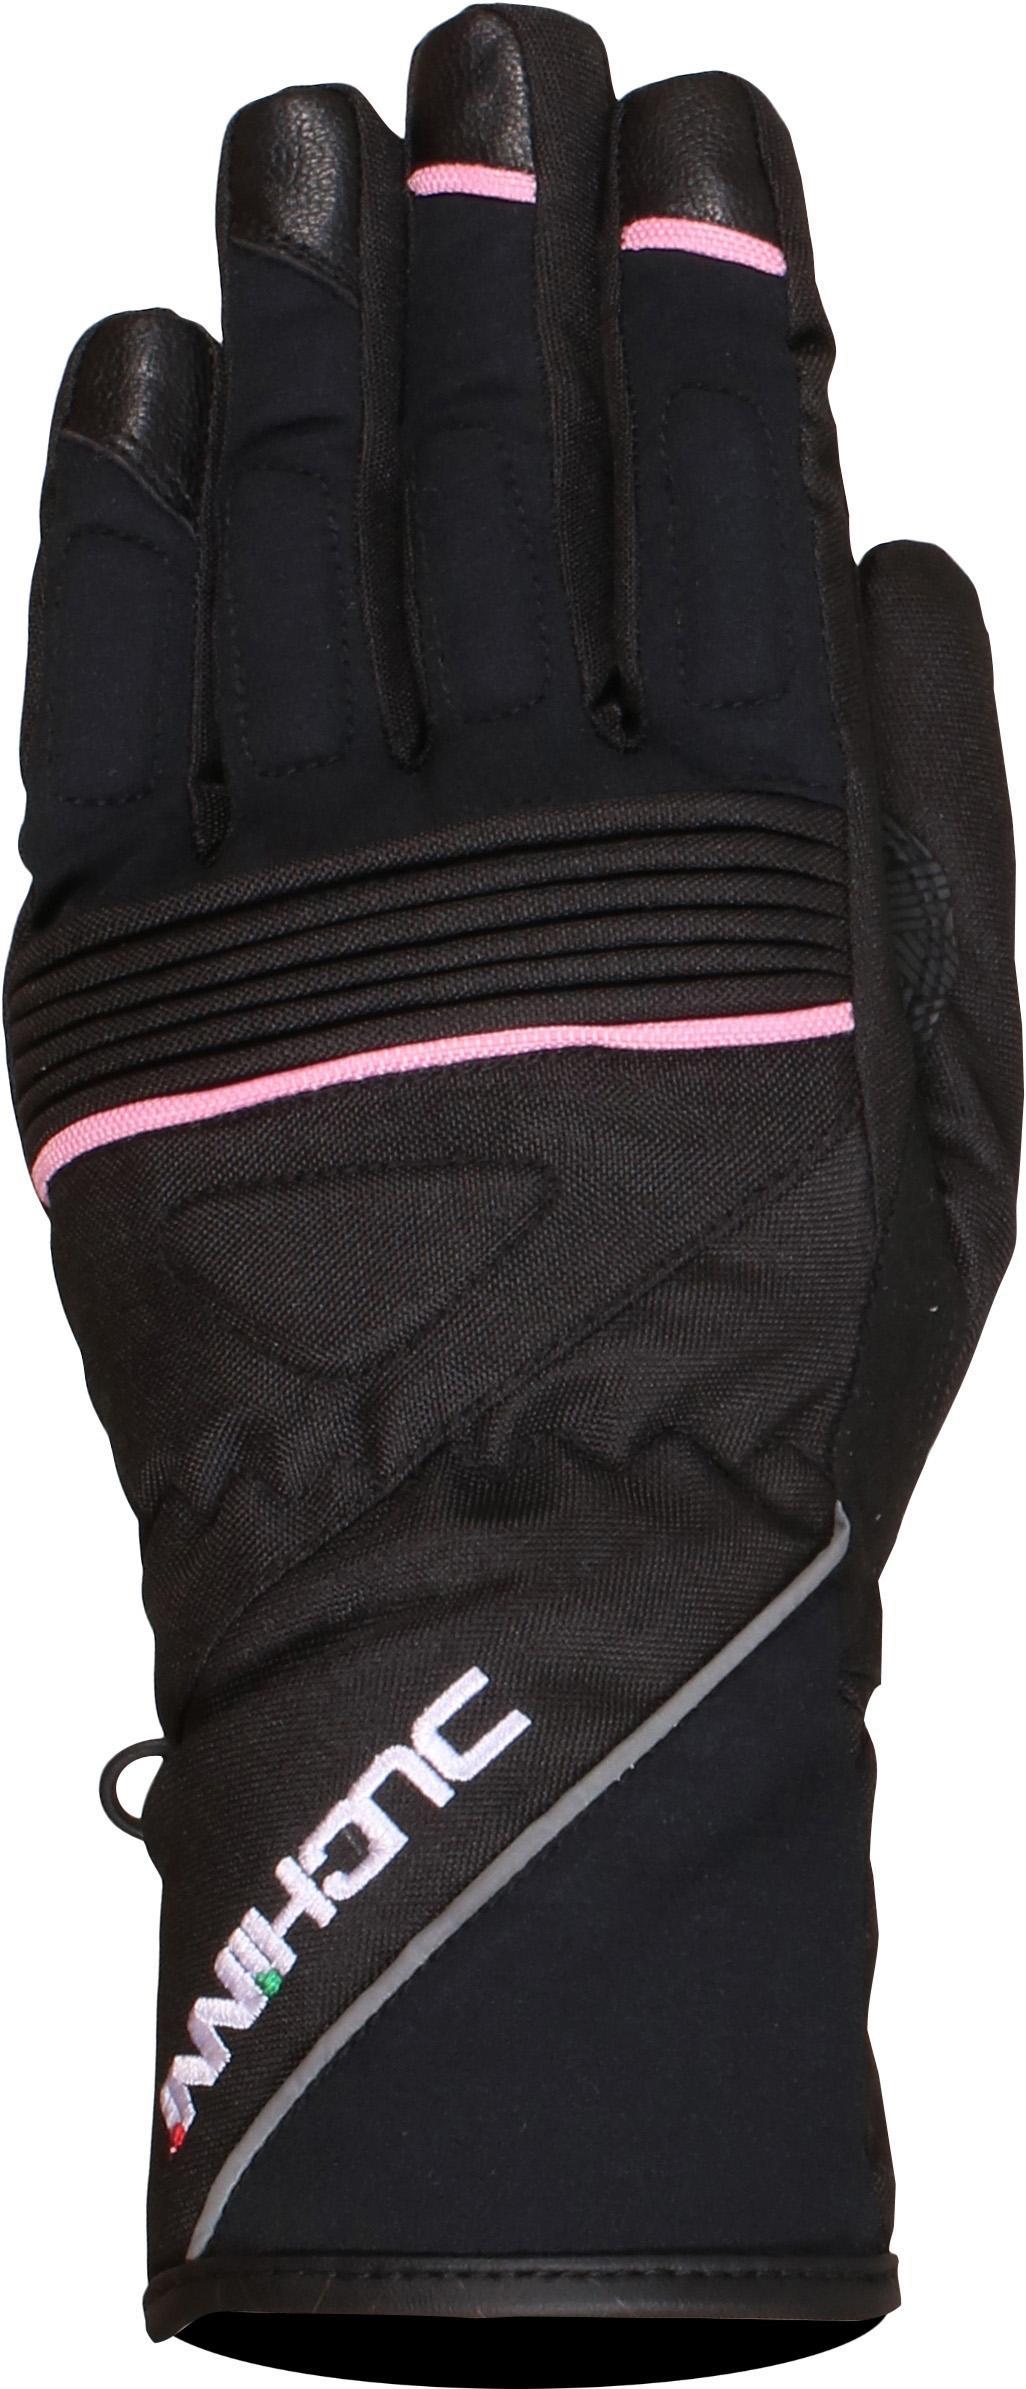 Duchinni Verona Women's Motorcycle Gloves - Black And Pink, M